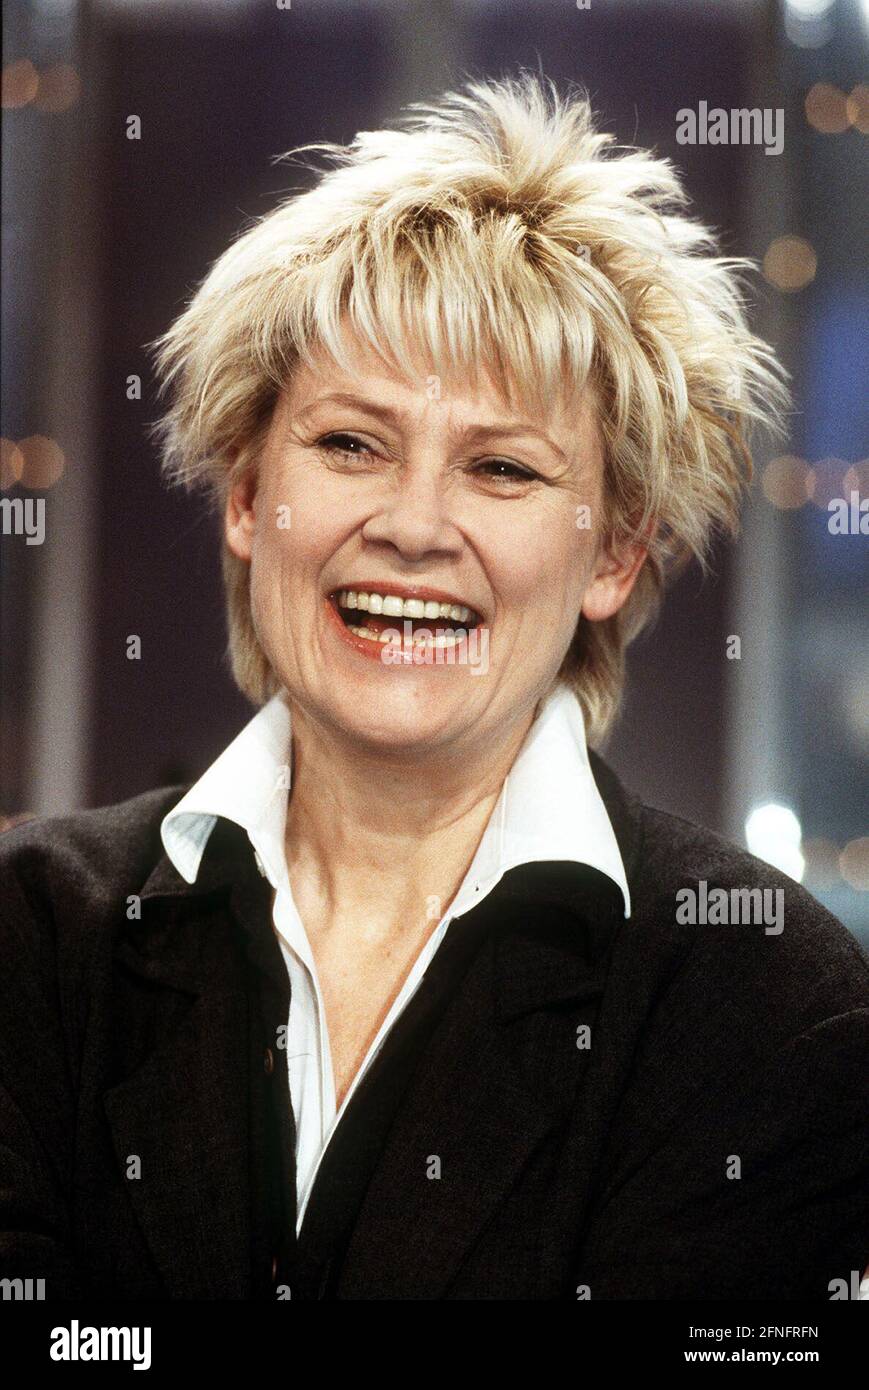 Gitte Haenning, dänische Sängerin, Portrait circa 1999. Gitte Haenning, Danish singer, portrait circa 1999. Stock Photo